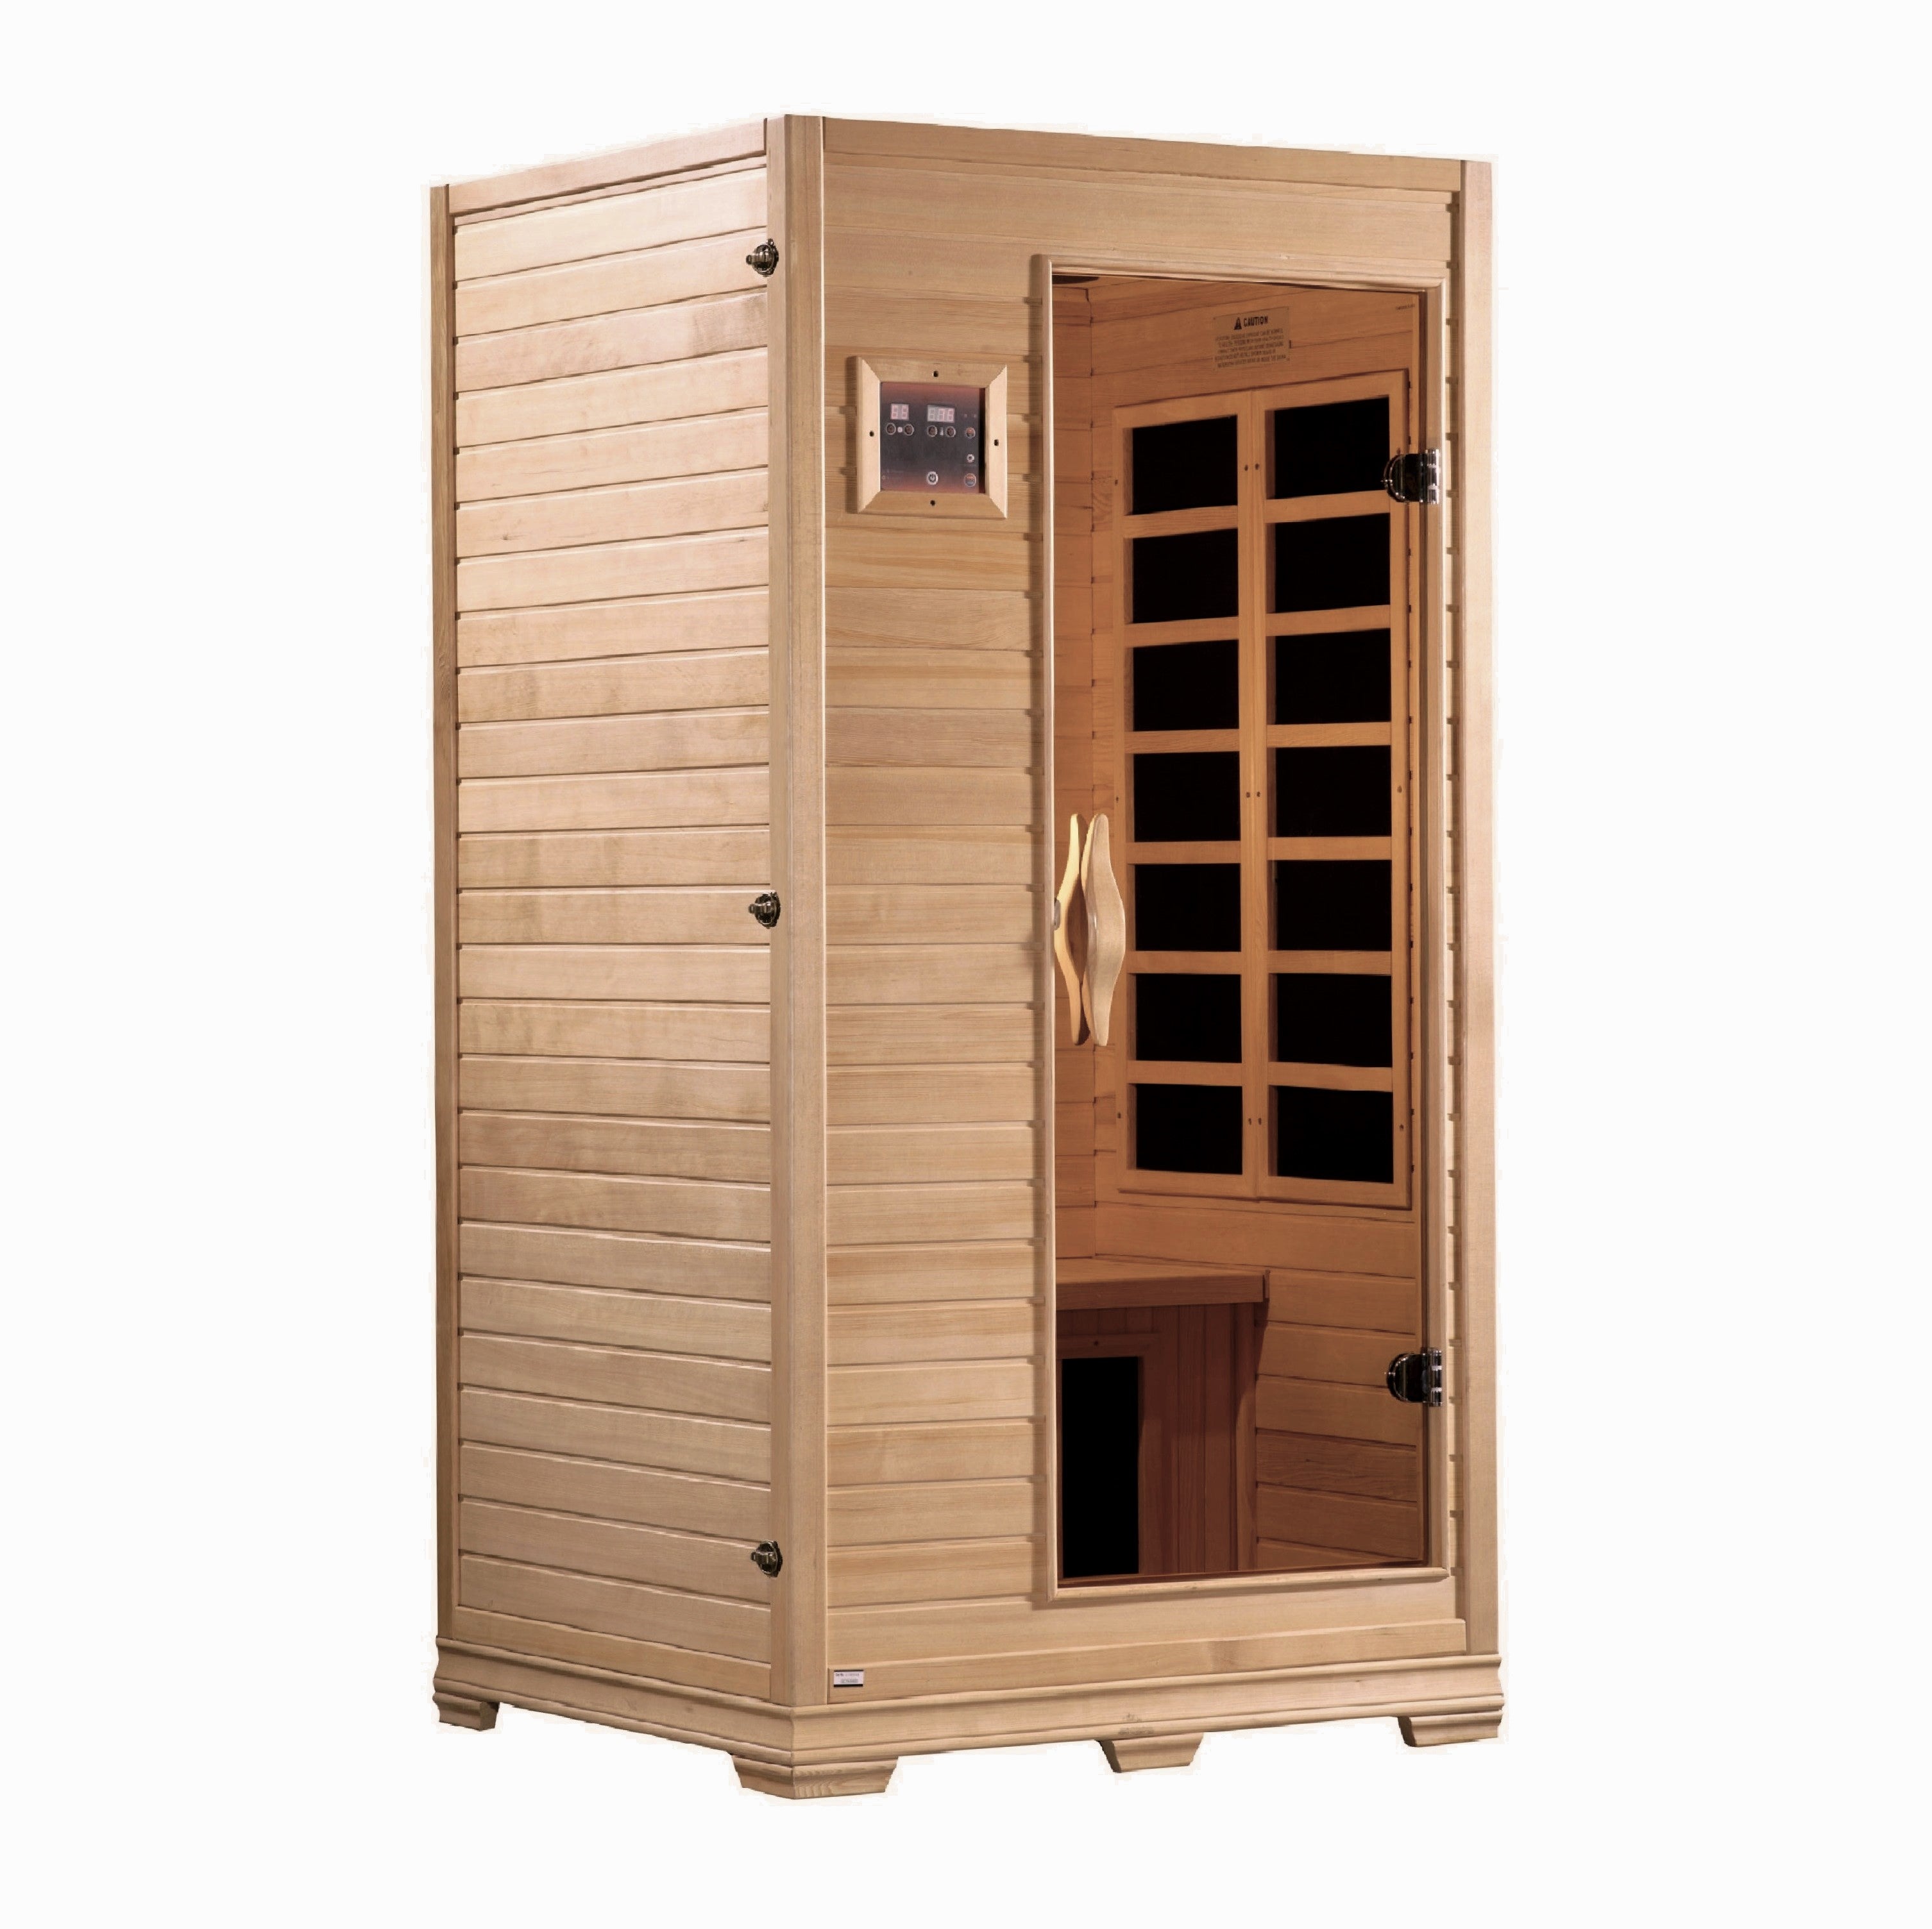 GDI-6109-01 Low EMF Far Infrared Sauna